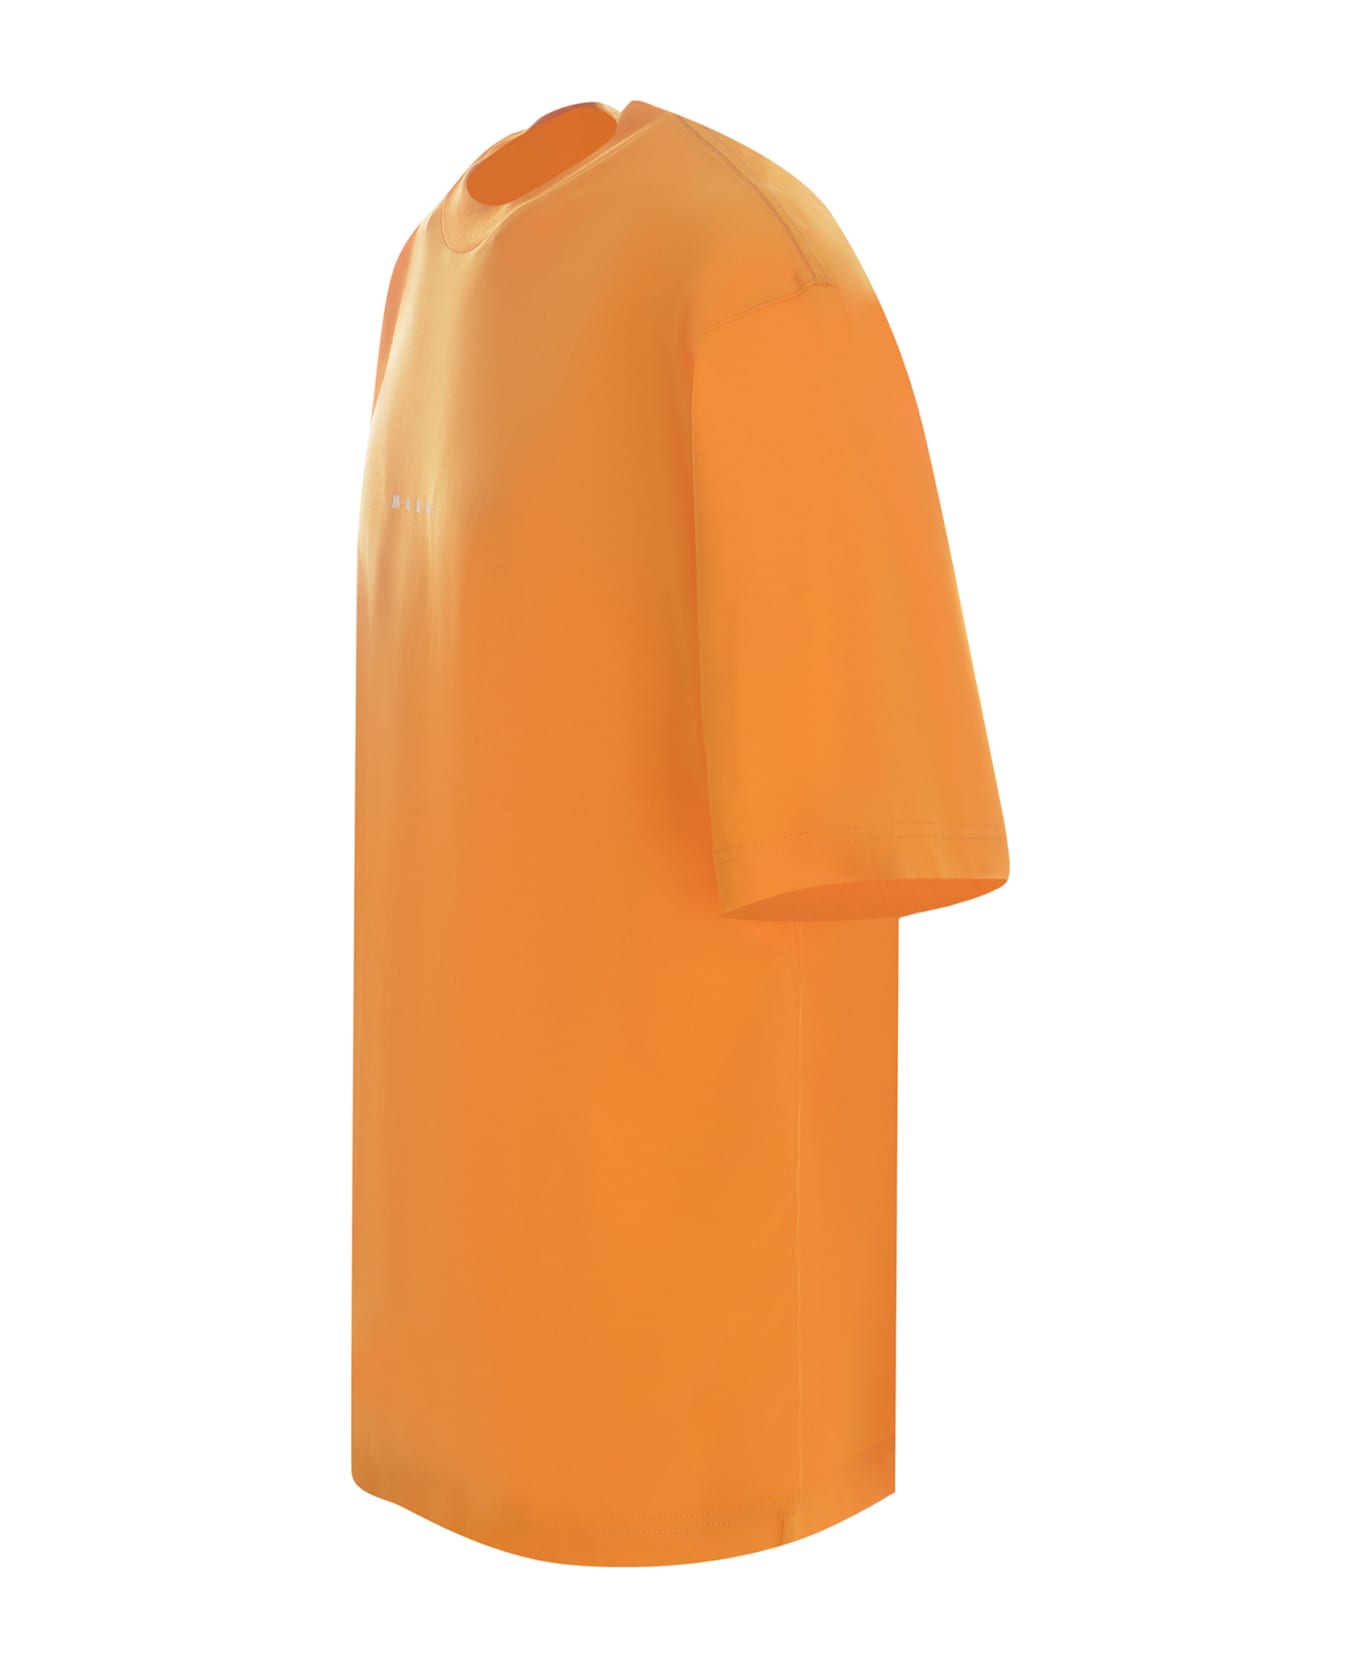 Marni T-shirt Marni Made Of Cotton - Light orange